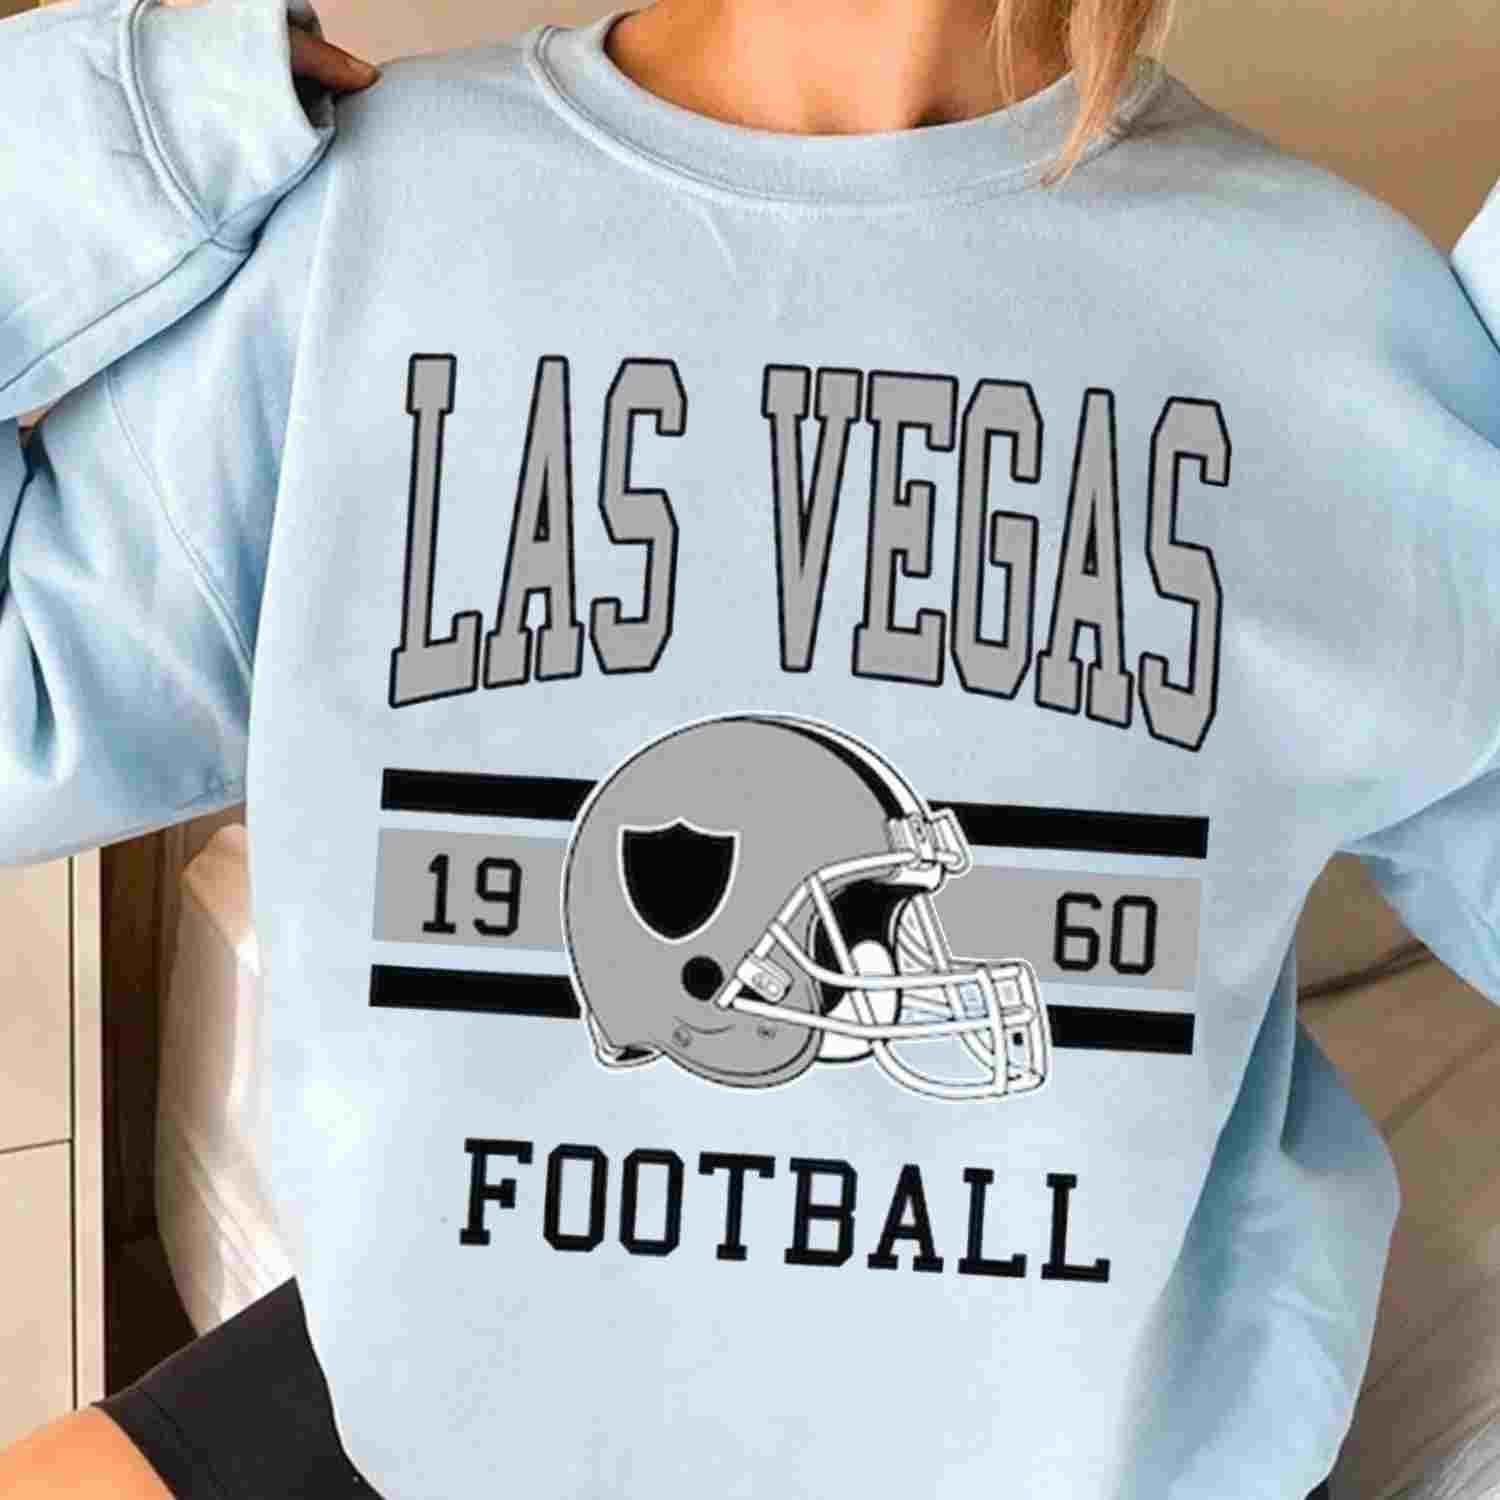 Vintage Sunday Helmet Football Las Vegas Raiders T-Shirt - Cruel Ball